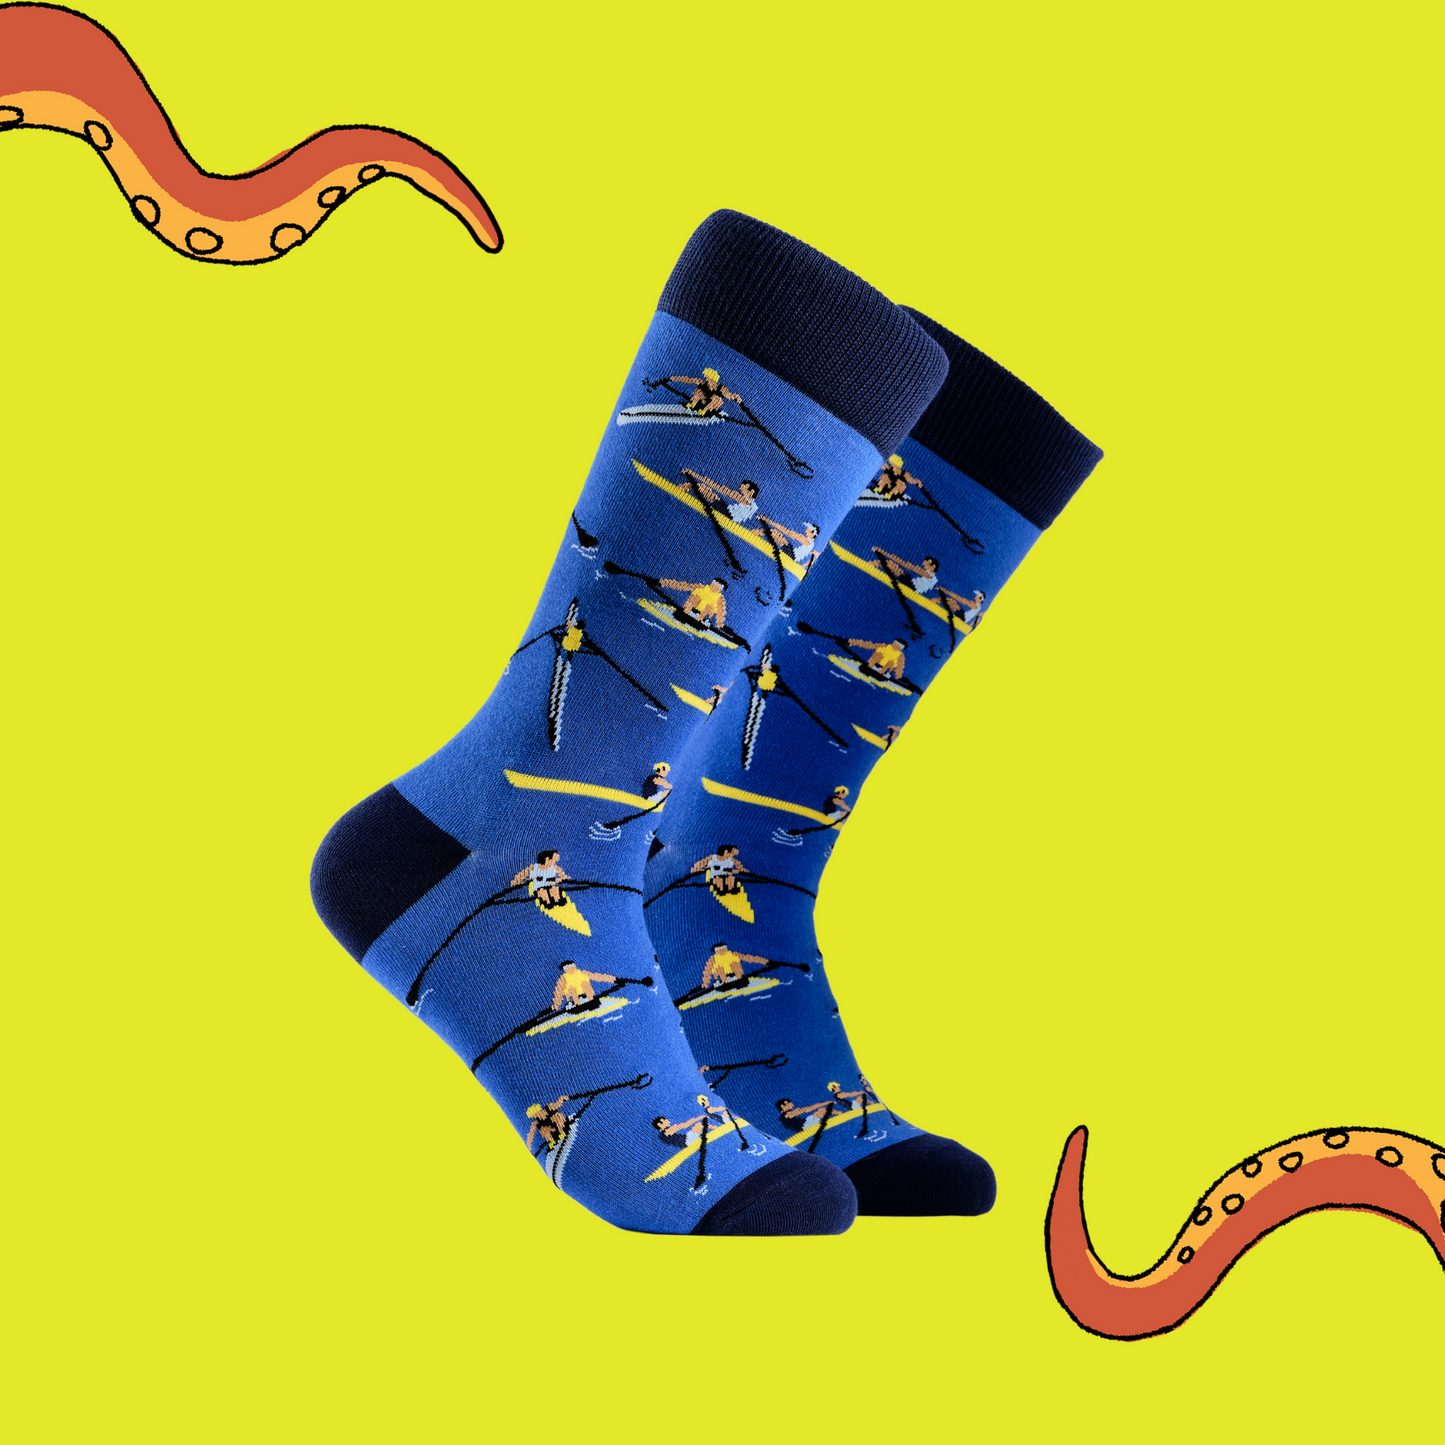 A pair of socks depicting row boat racers. Blue legs, dark blue cuff, heel and toe.